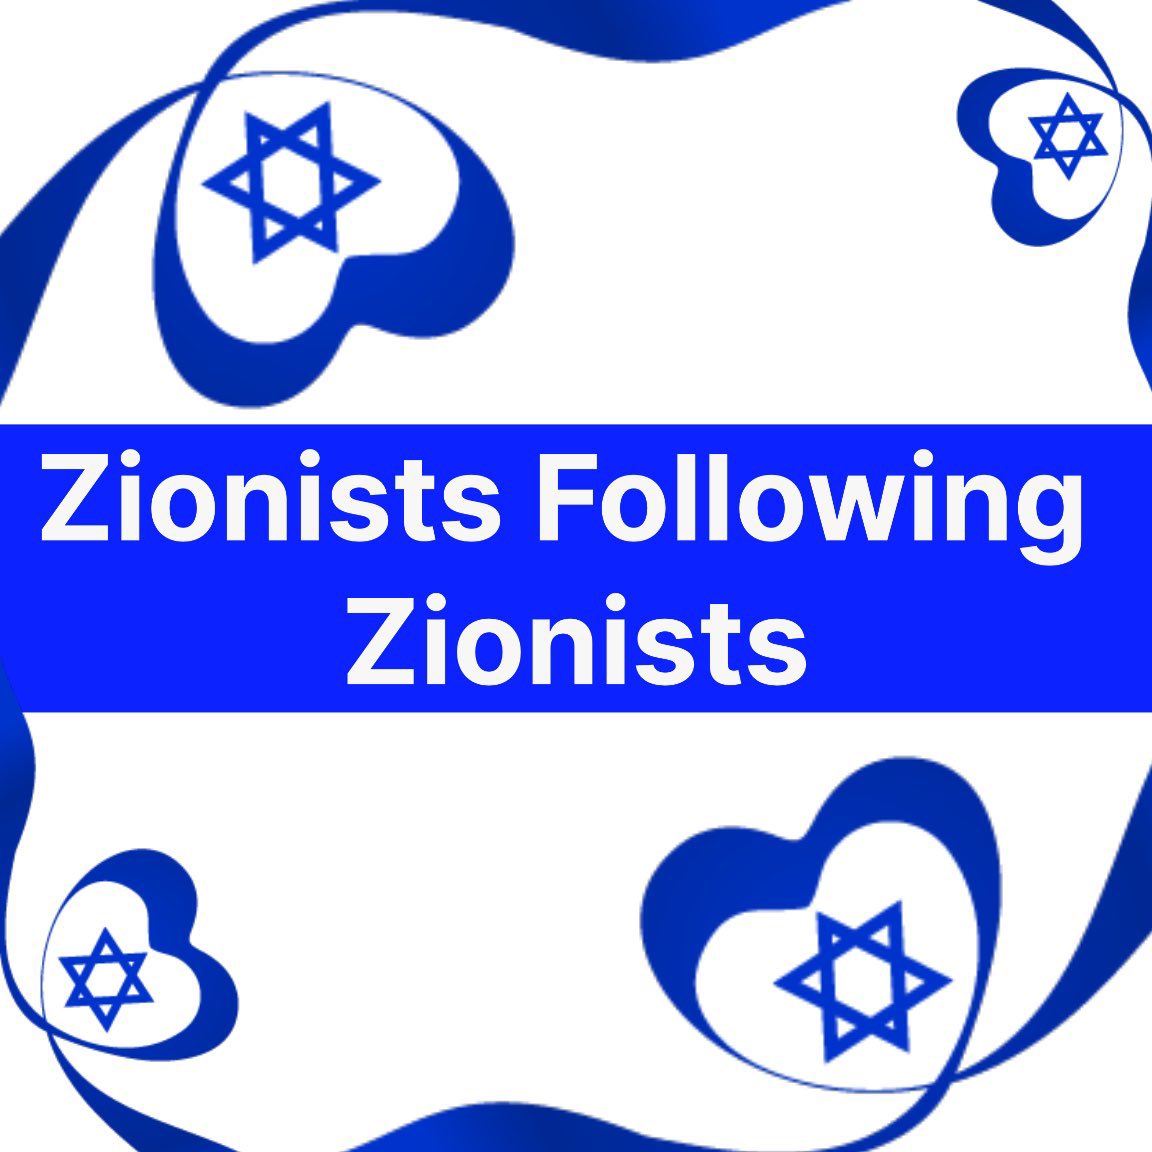 Boost #57 pro-Israel accounts under 1K. #ZionistsFollowZionists #StrongerTogether 🤍🇮🇱 🙏🏼

@jewishzionist26 
@Ephraim5553
@AlexGalperin4 
@BrynGob123 
@Karen4154321249 
@FitzmcMc 
@ELMG100 
@IsraeliZionist1 
@Scottblue7 
@alibabainjeans 
@NandoArriechi2